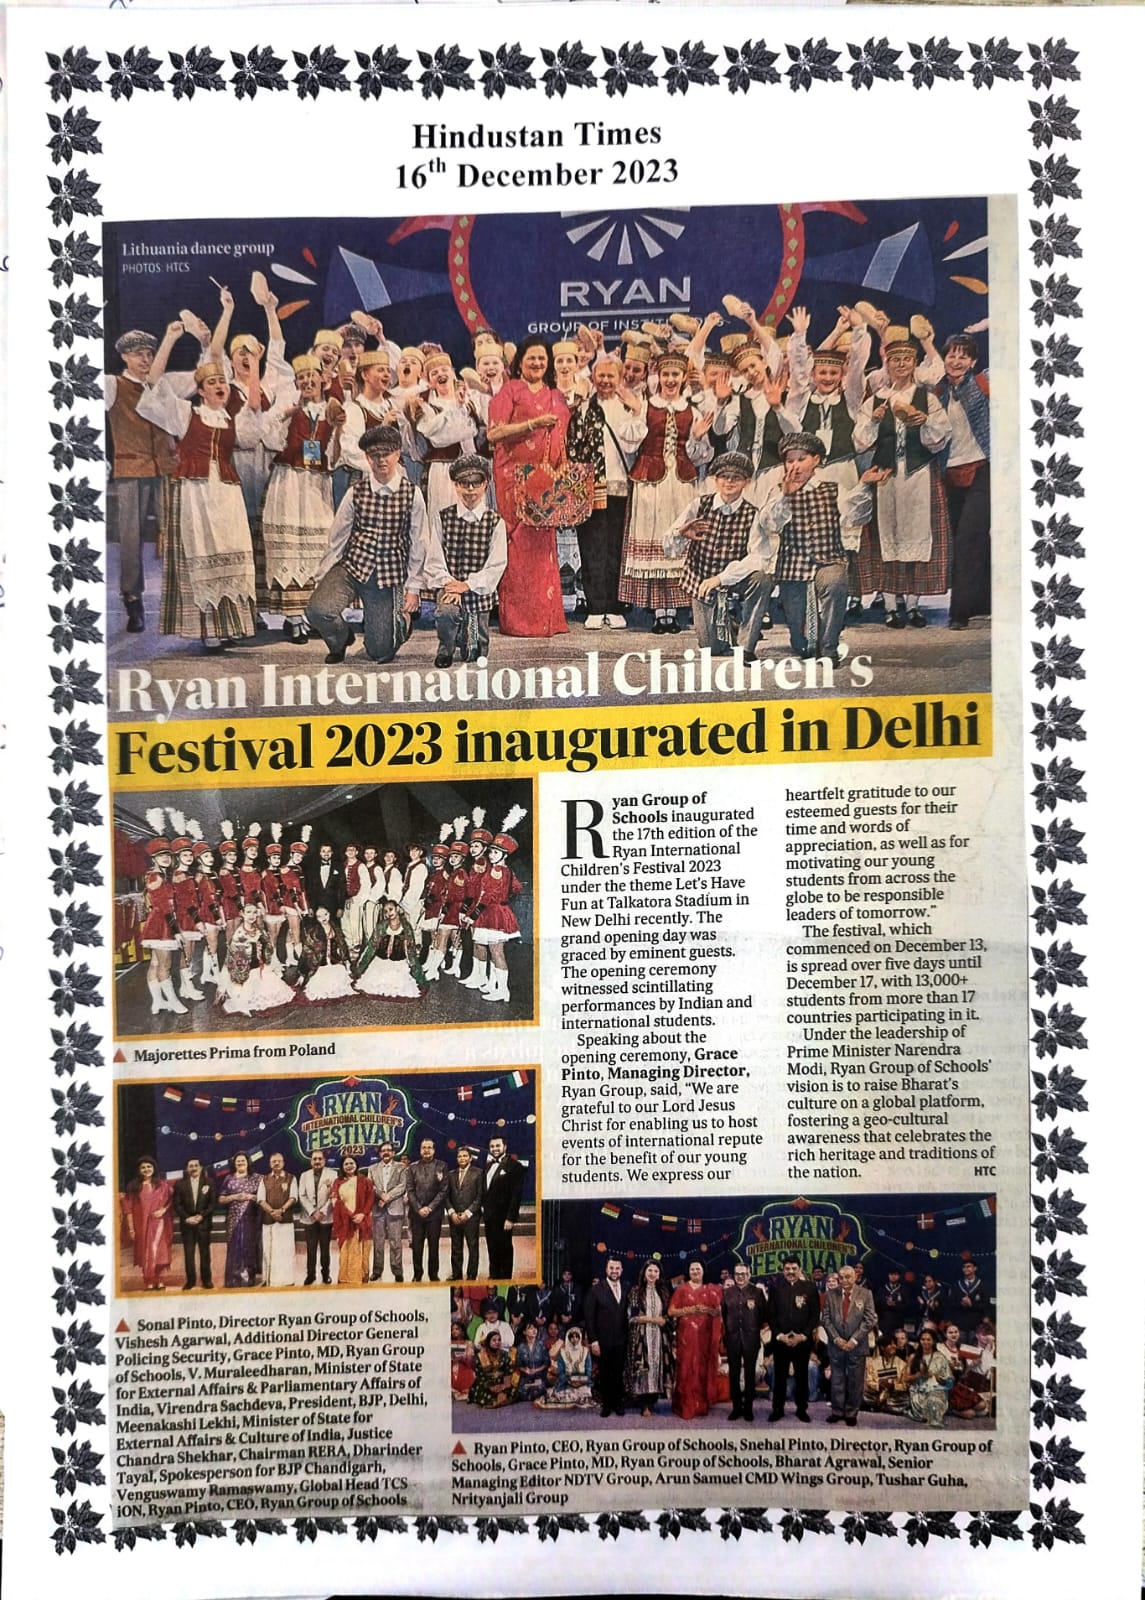 Ryan International Childrens Festival 2023 Inaugurated in Delhi